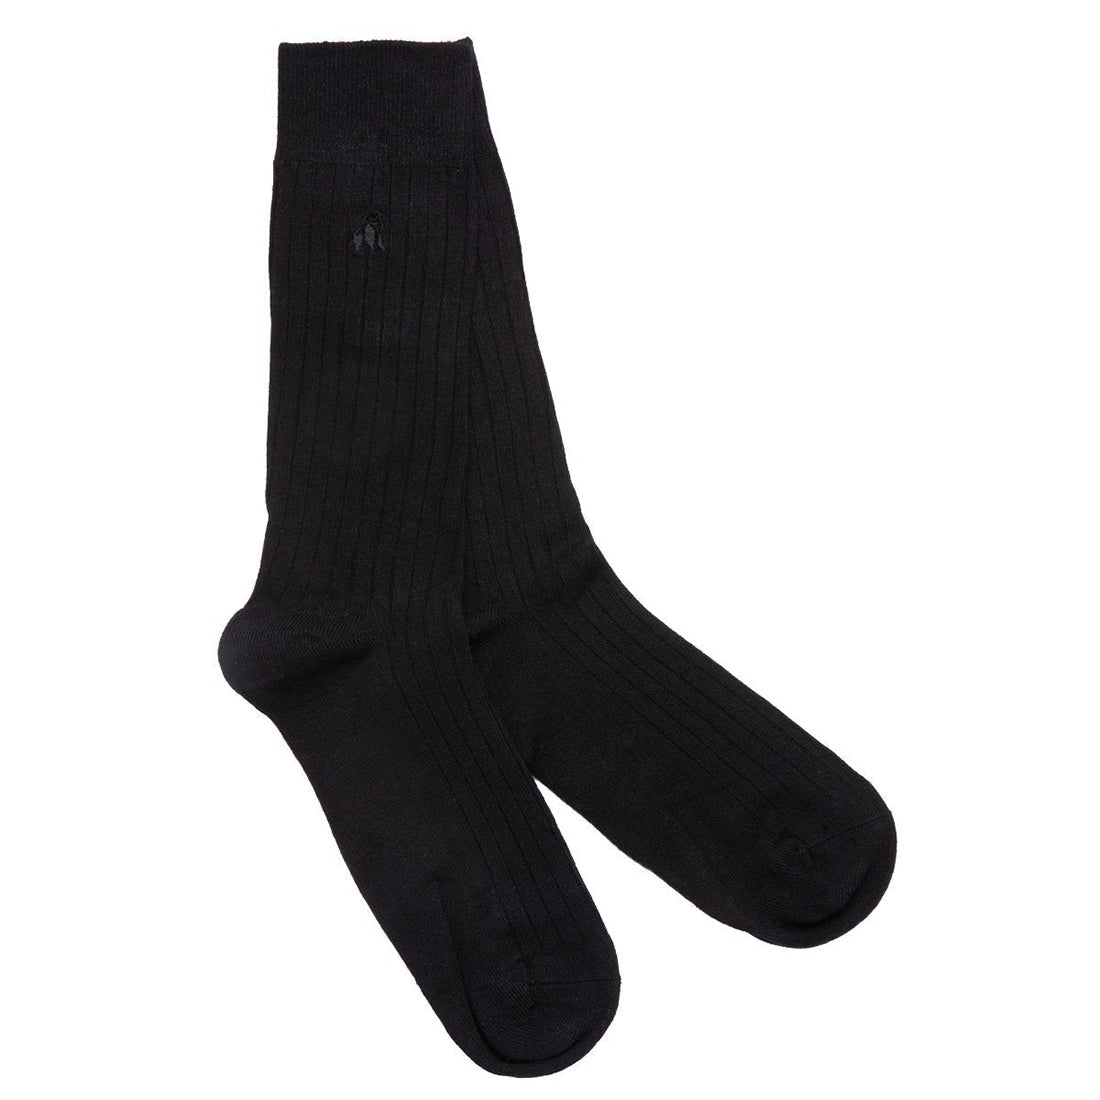 socks-jet-black-bamboo-socks-1_02a5f58d-71ec-4bec-bf84-0bfd925620a2.jpg